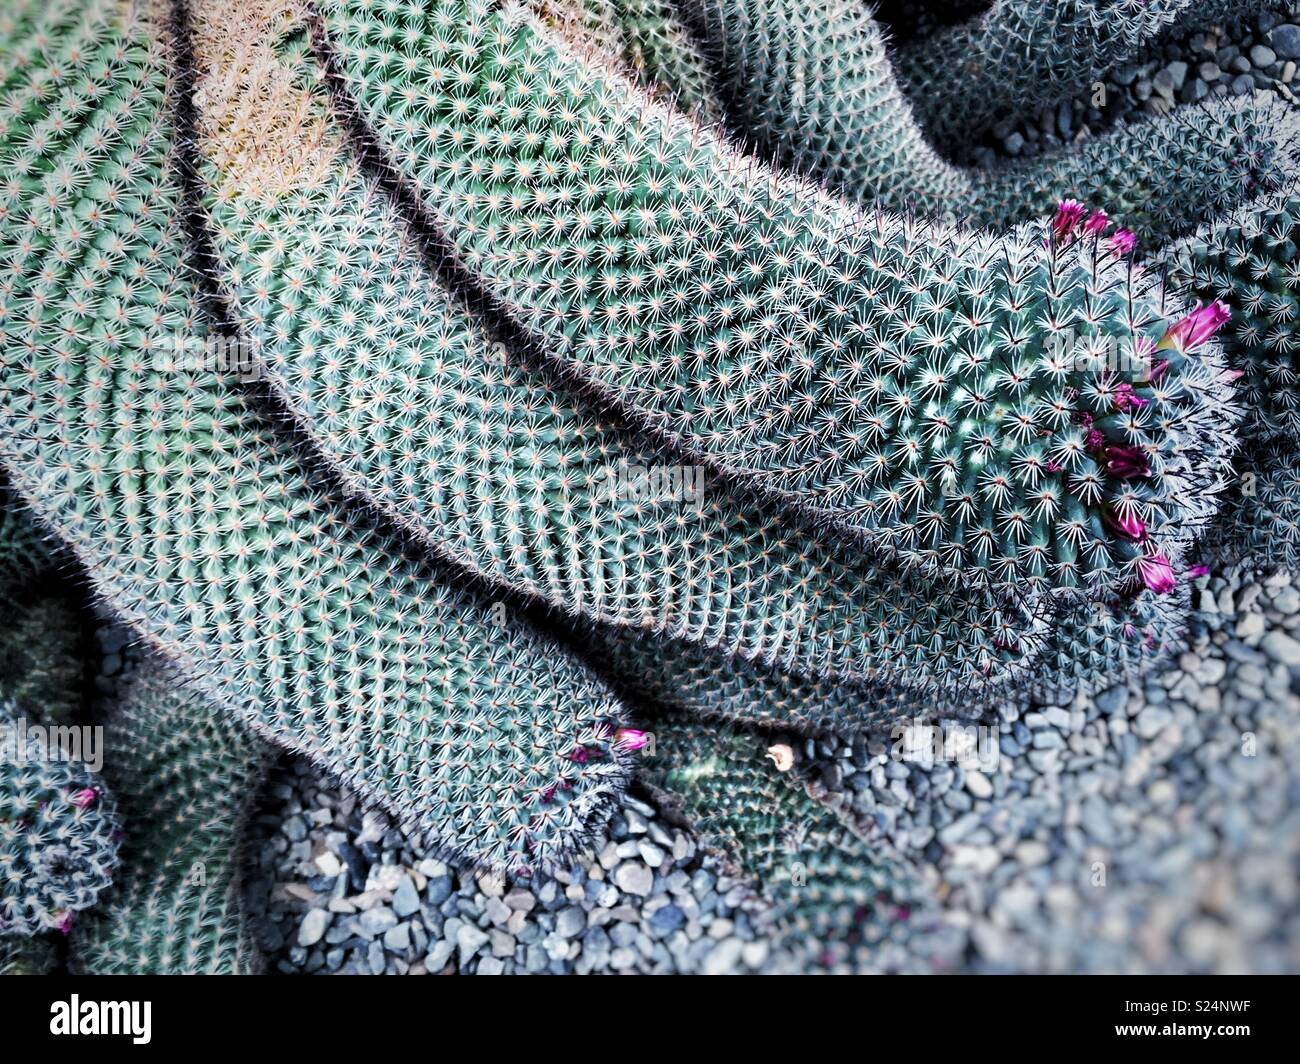 Giant cacti succulents Stock Photo